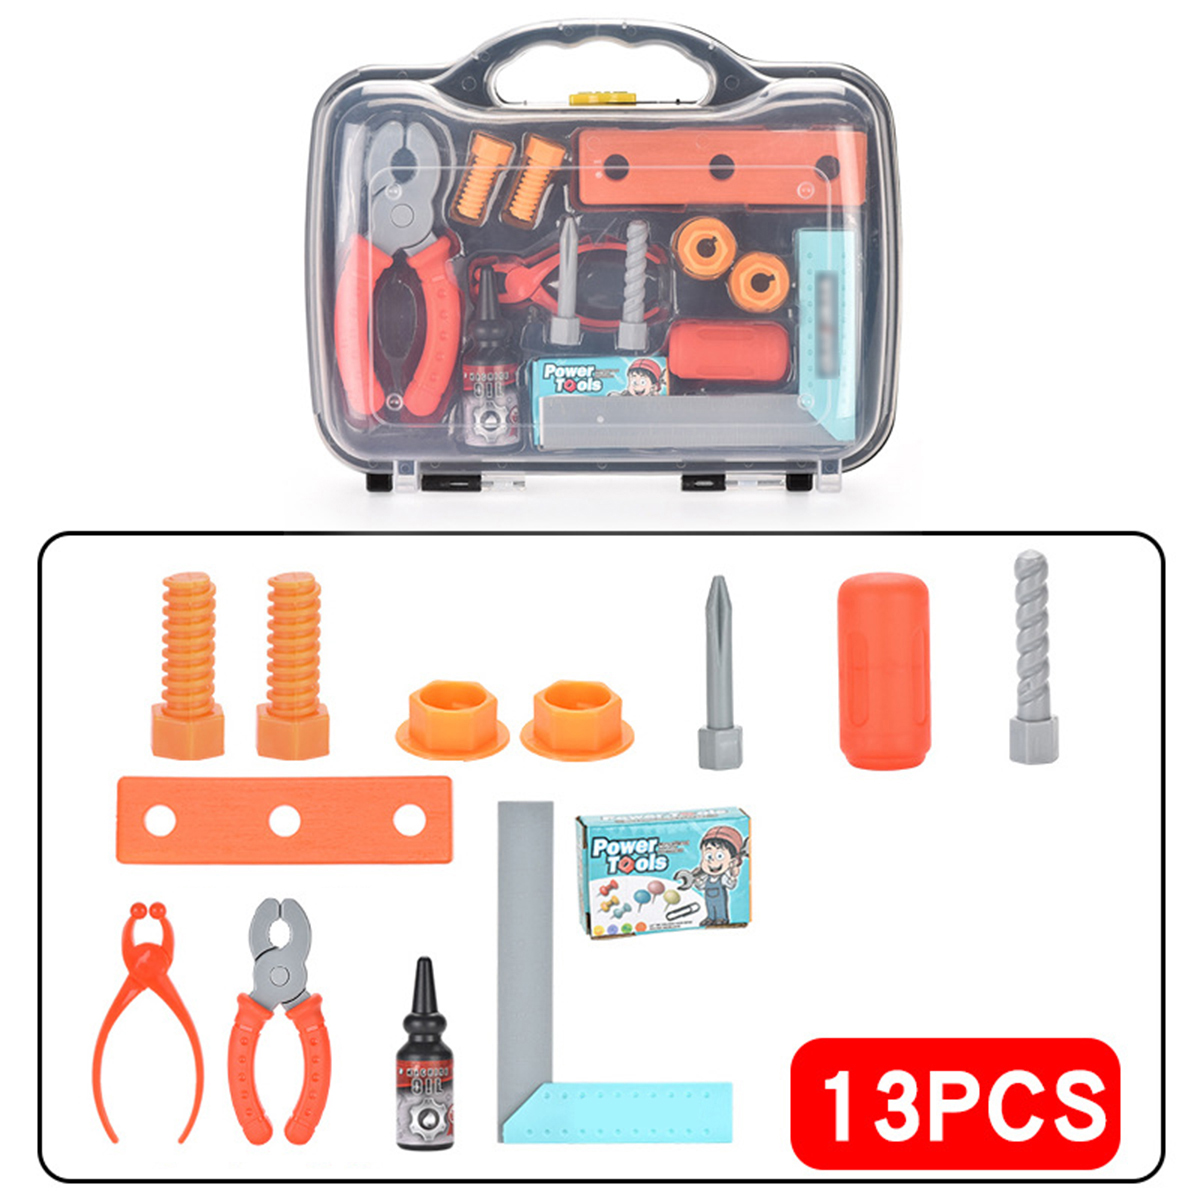 1372Pcs-3D-Puzzle-DIY-Asassembly-Screwing-Blocks-Repair-Tool-Kit-Educational-Toy-for-Kids-Gift-1735098-4